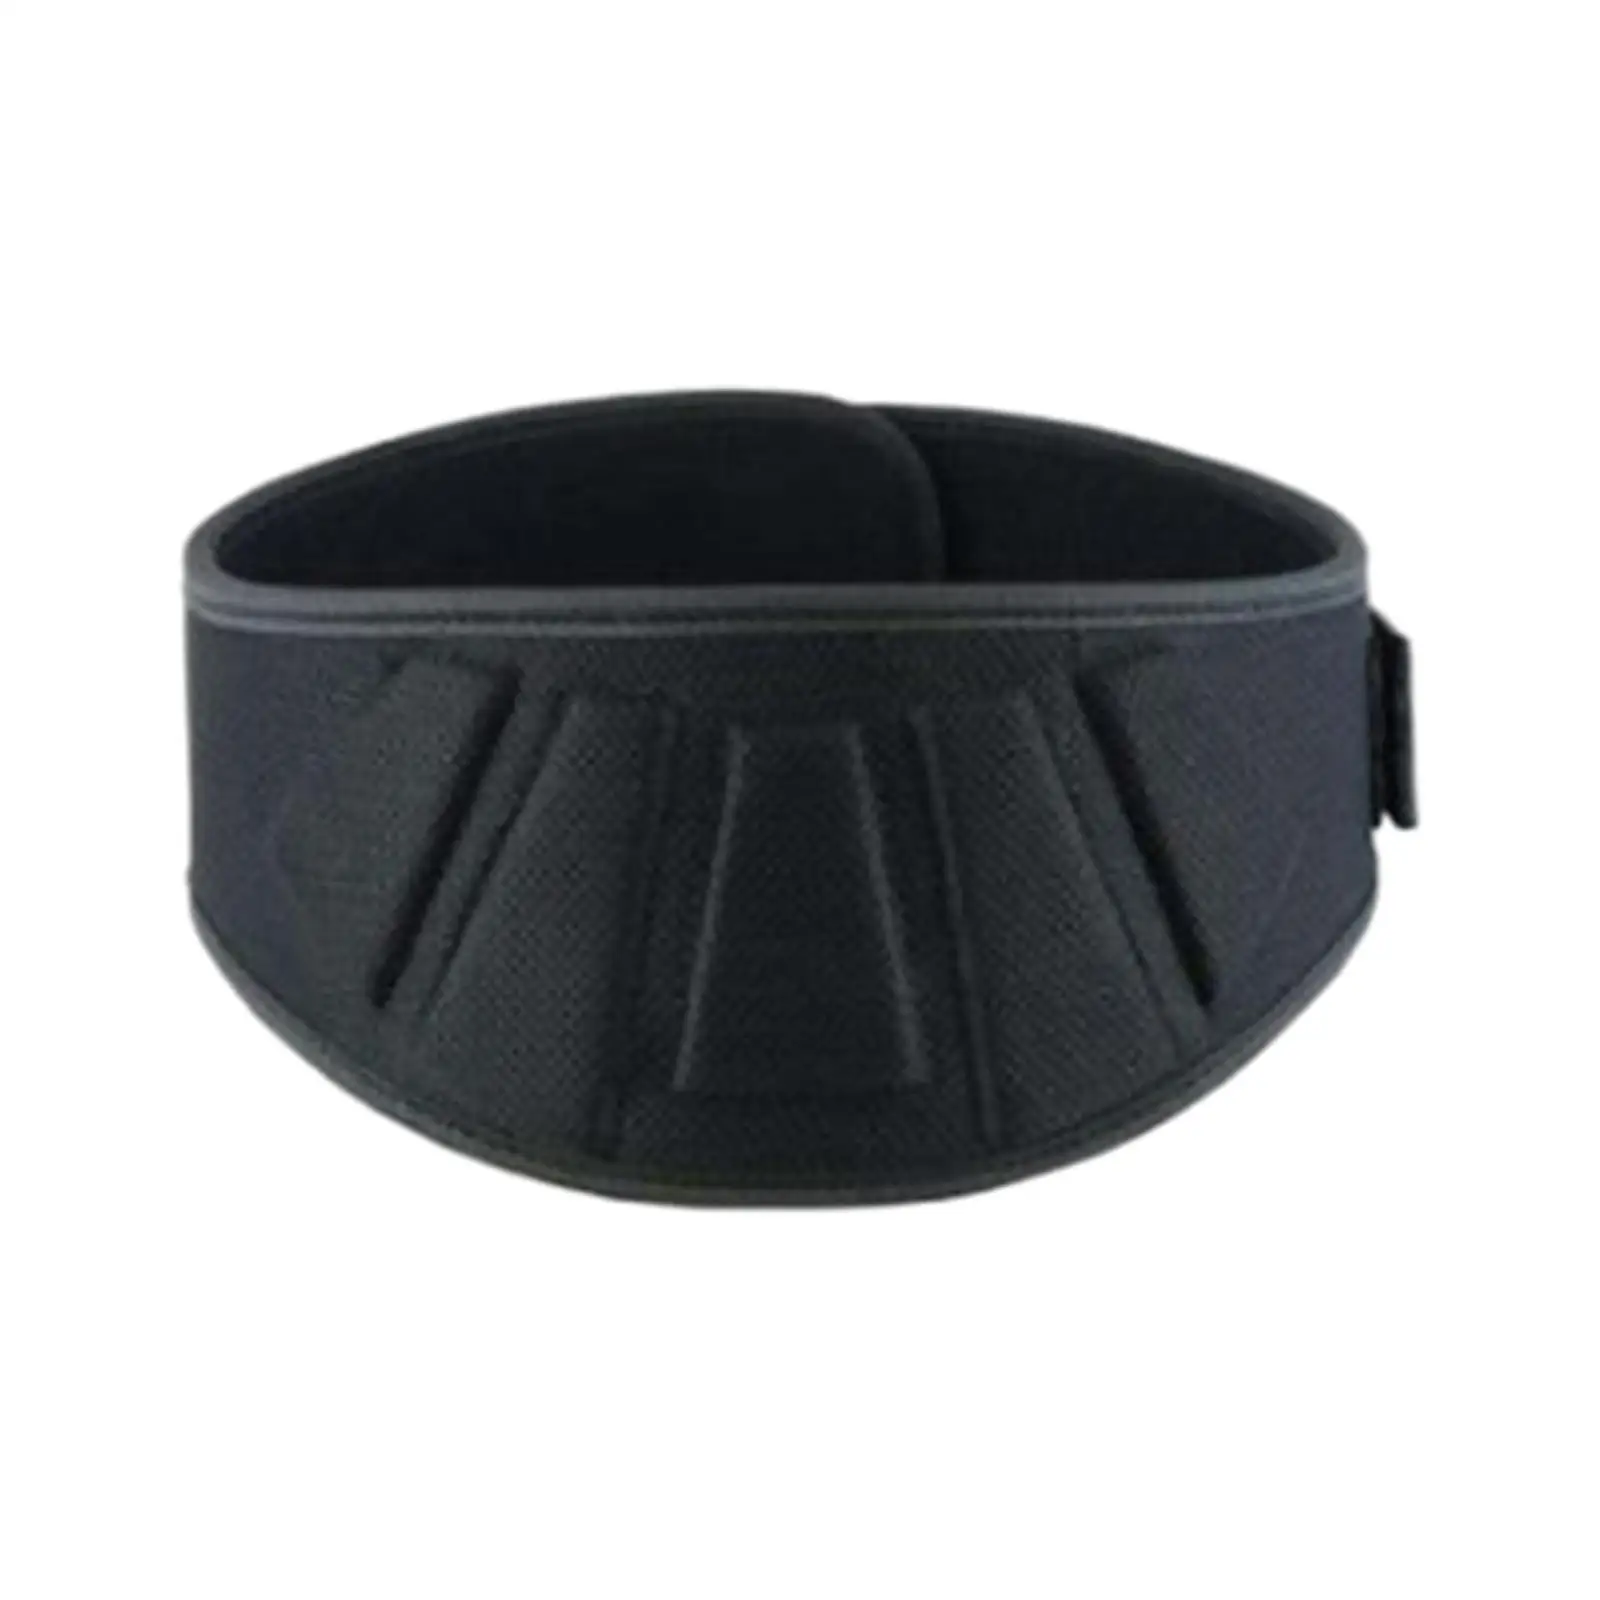 Weight Lifting Belt Waist Support Accessories Gym Weightlifting Belt for Cross Training Squats Bodybuilding Men and Women Unisex